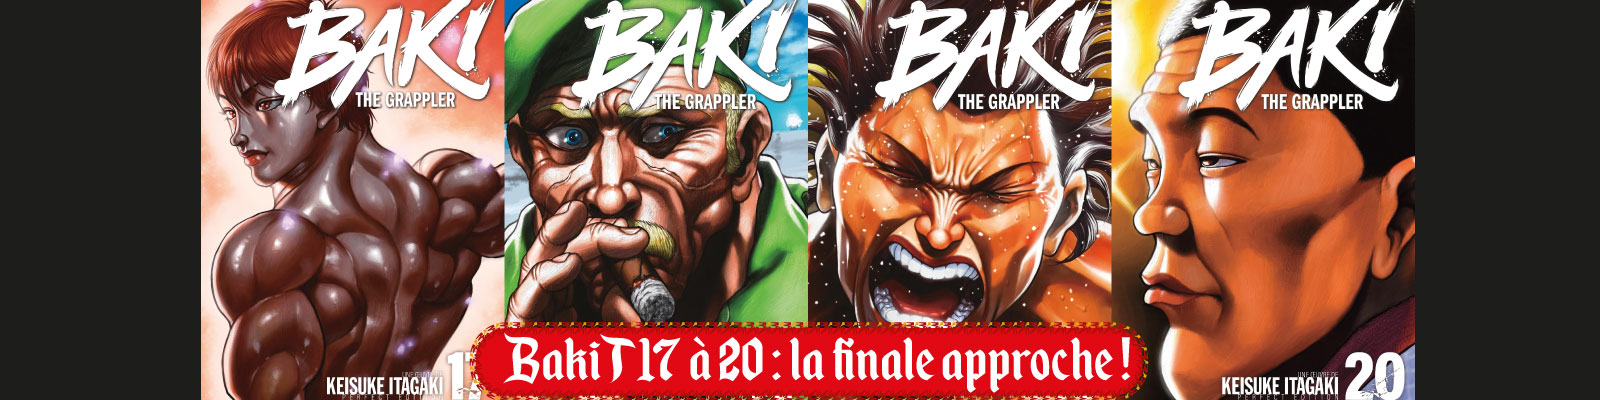 Baki-T17-à-20---la-finale-approche-!--2